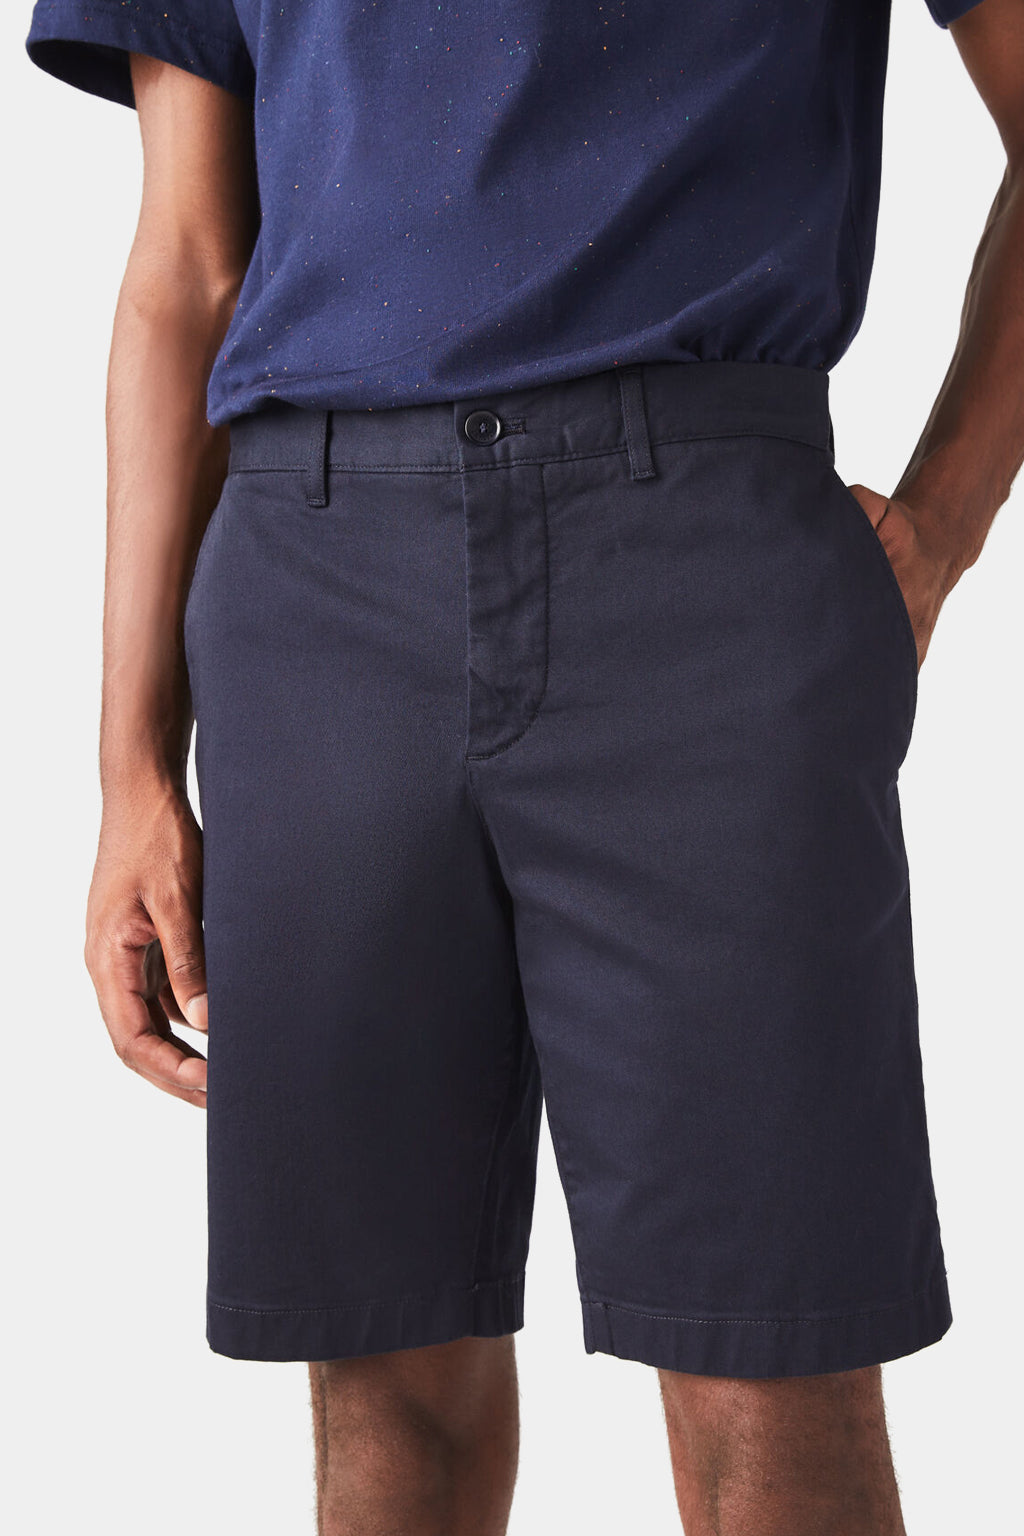 Lacoste - Men's Slim Fit Stretch Cotton Bermuda Shorts